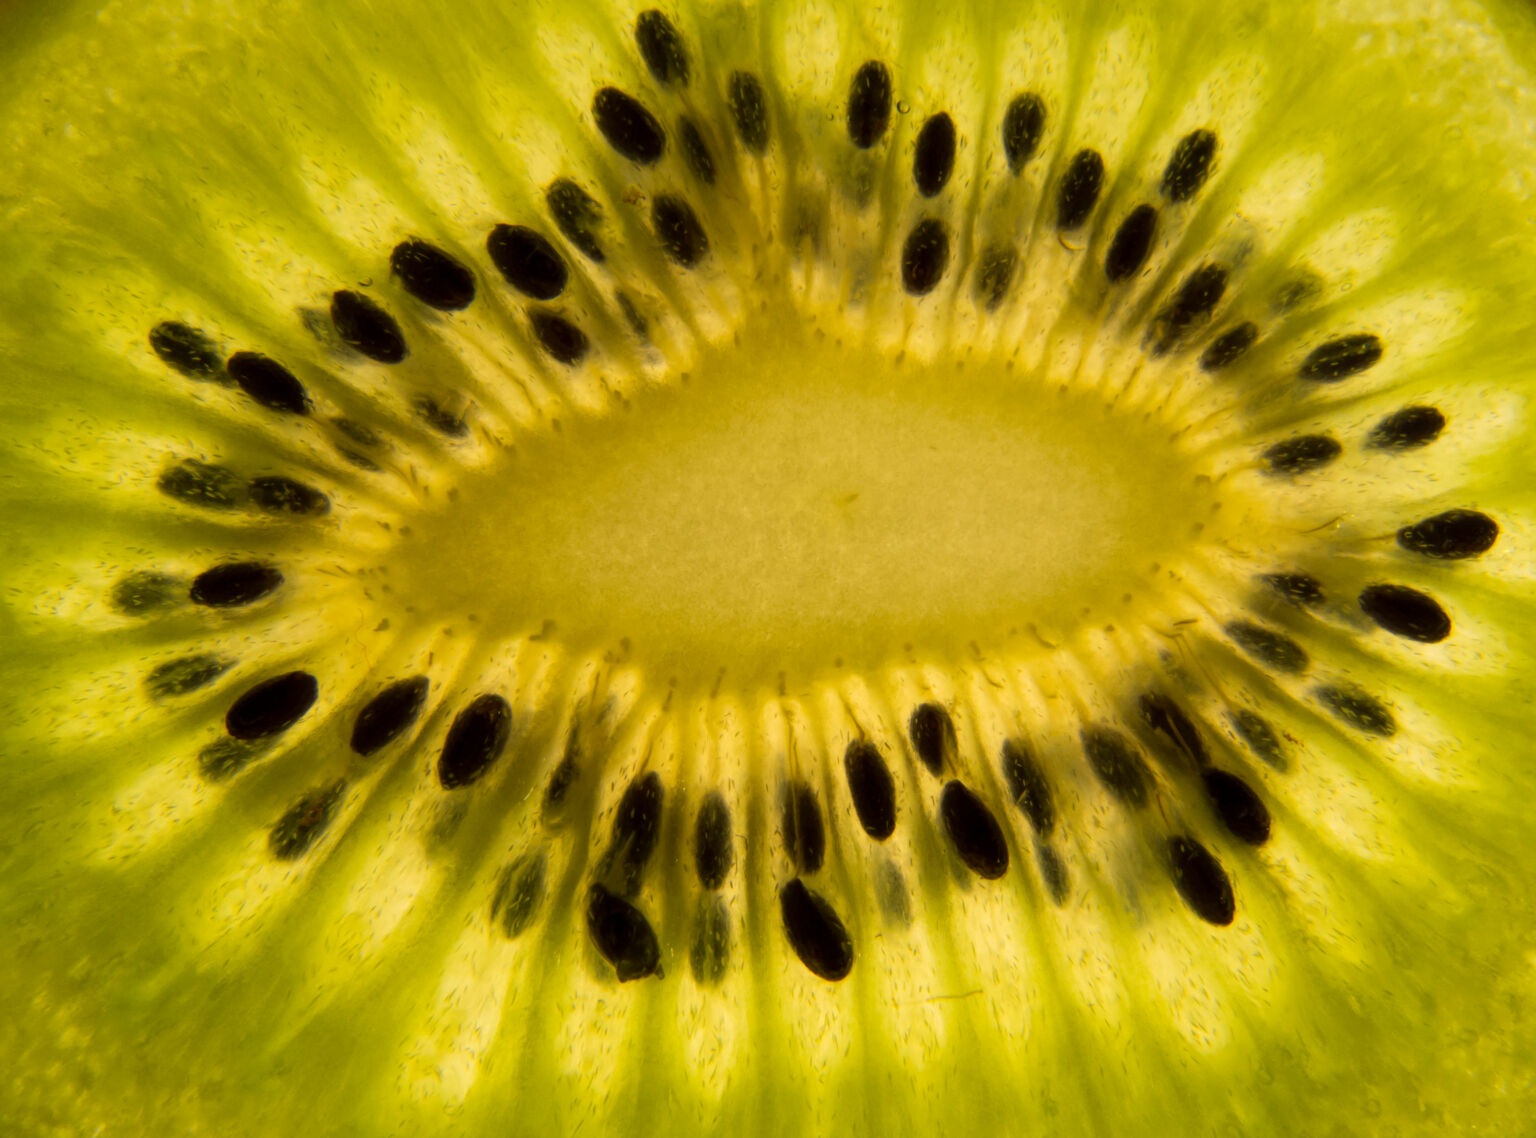 Kiwi Slice Closeup Copyright Free Photo By M Vorel Libreshot